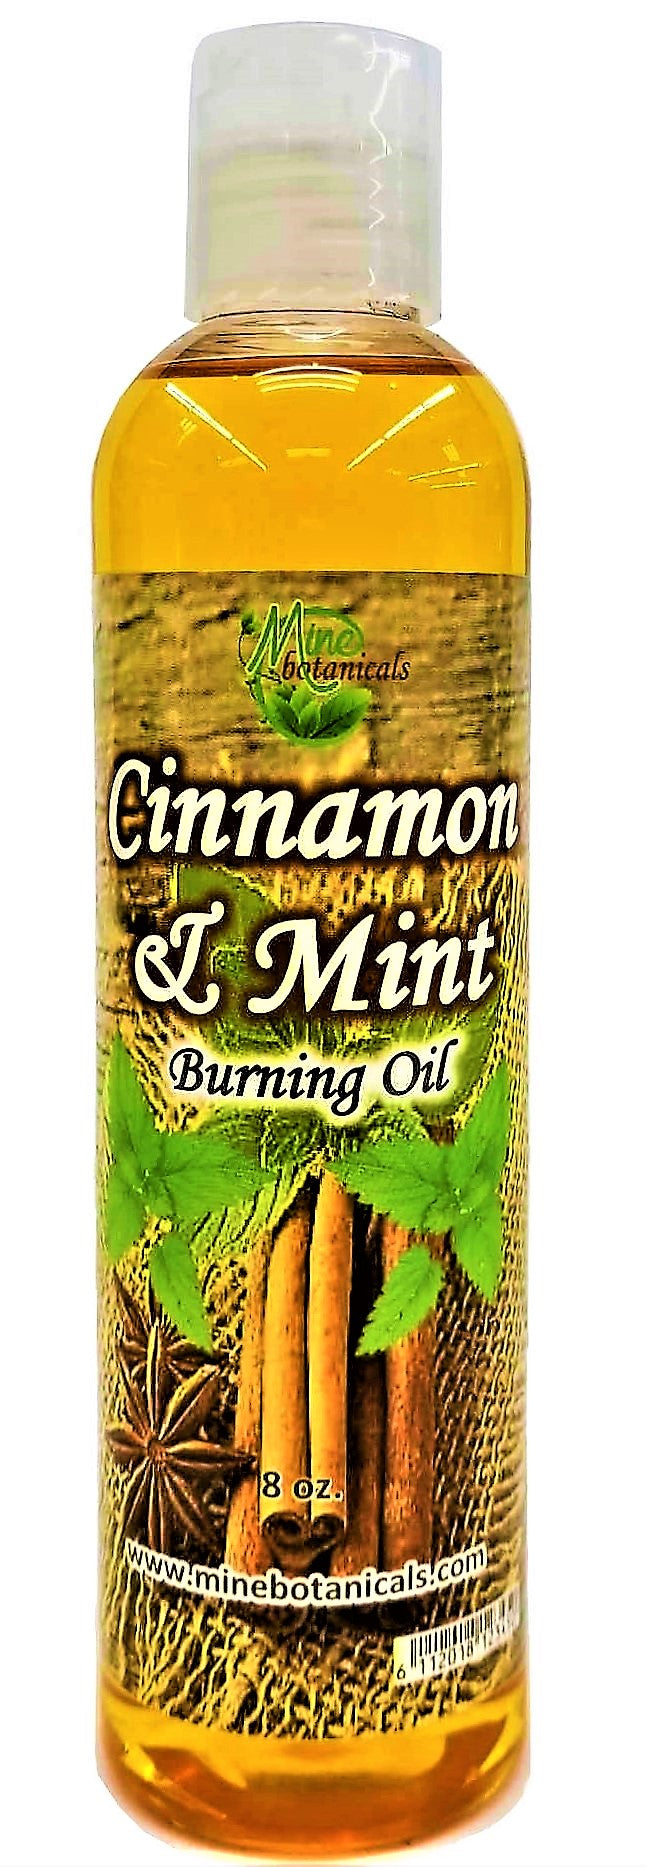 Cinnamon Mint Burning Oil